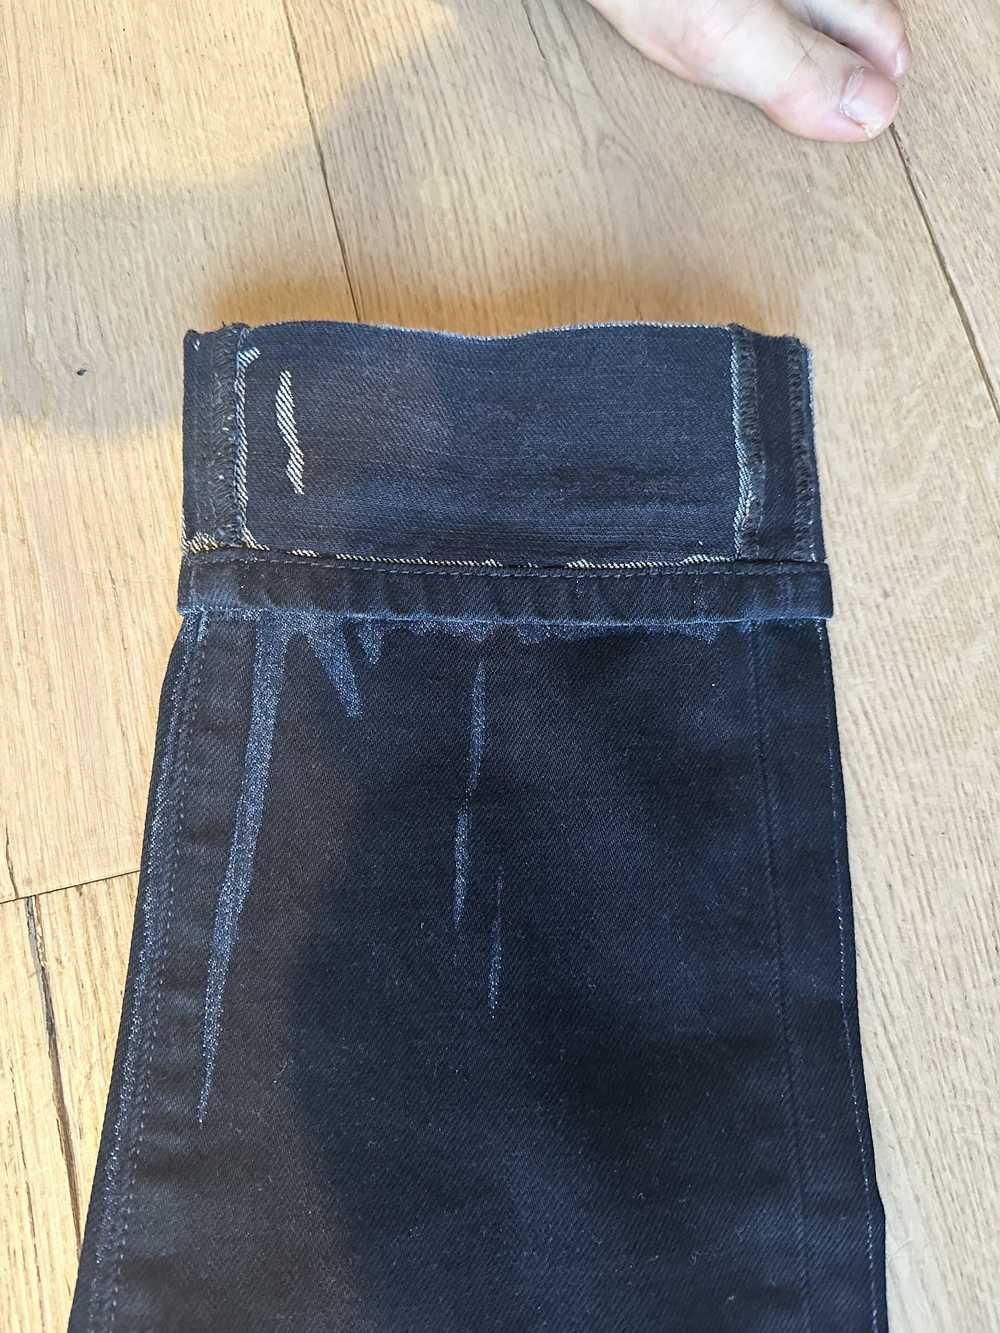 Prada Prada Over dyed slim fit jeans - image 10